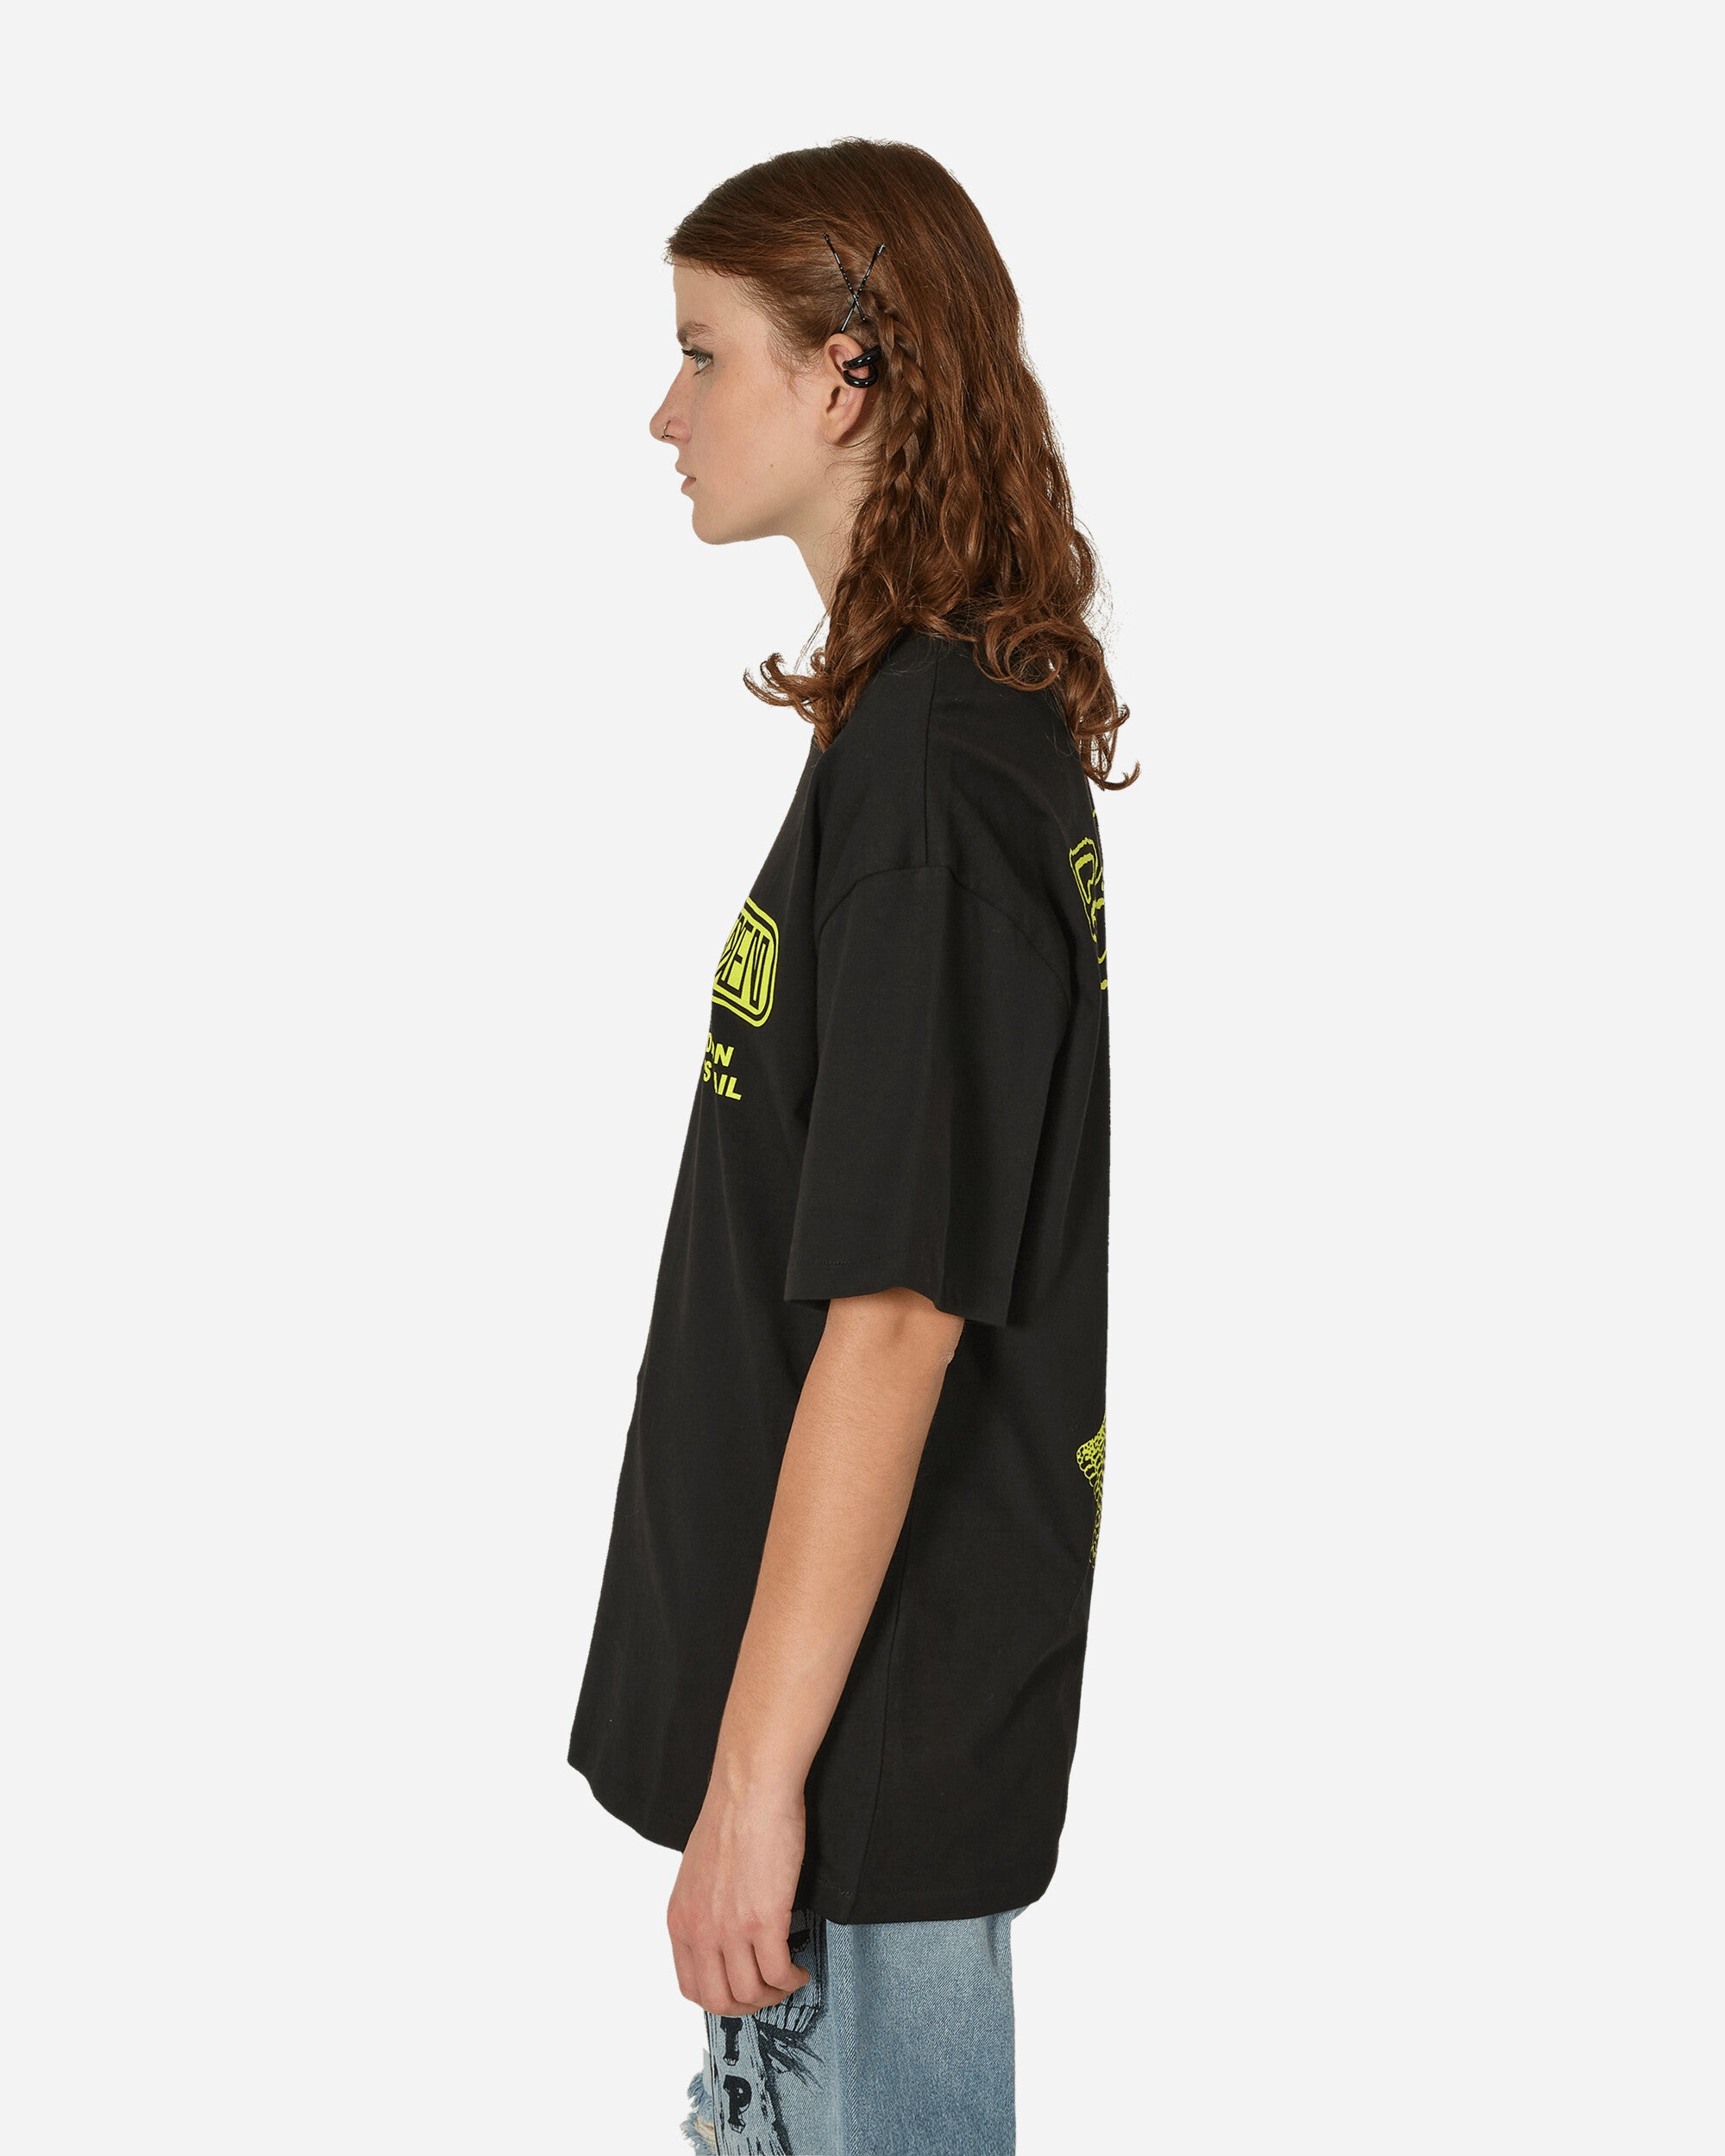 Rayon Vert Lapland T-Shirt Golgotha Black T-Shirts Shortsleeve RVS2-TS02 001